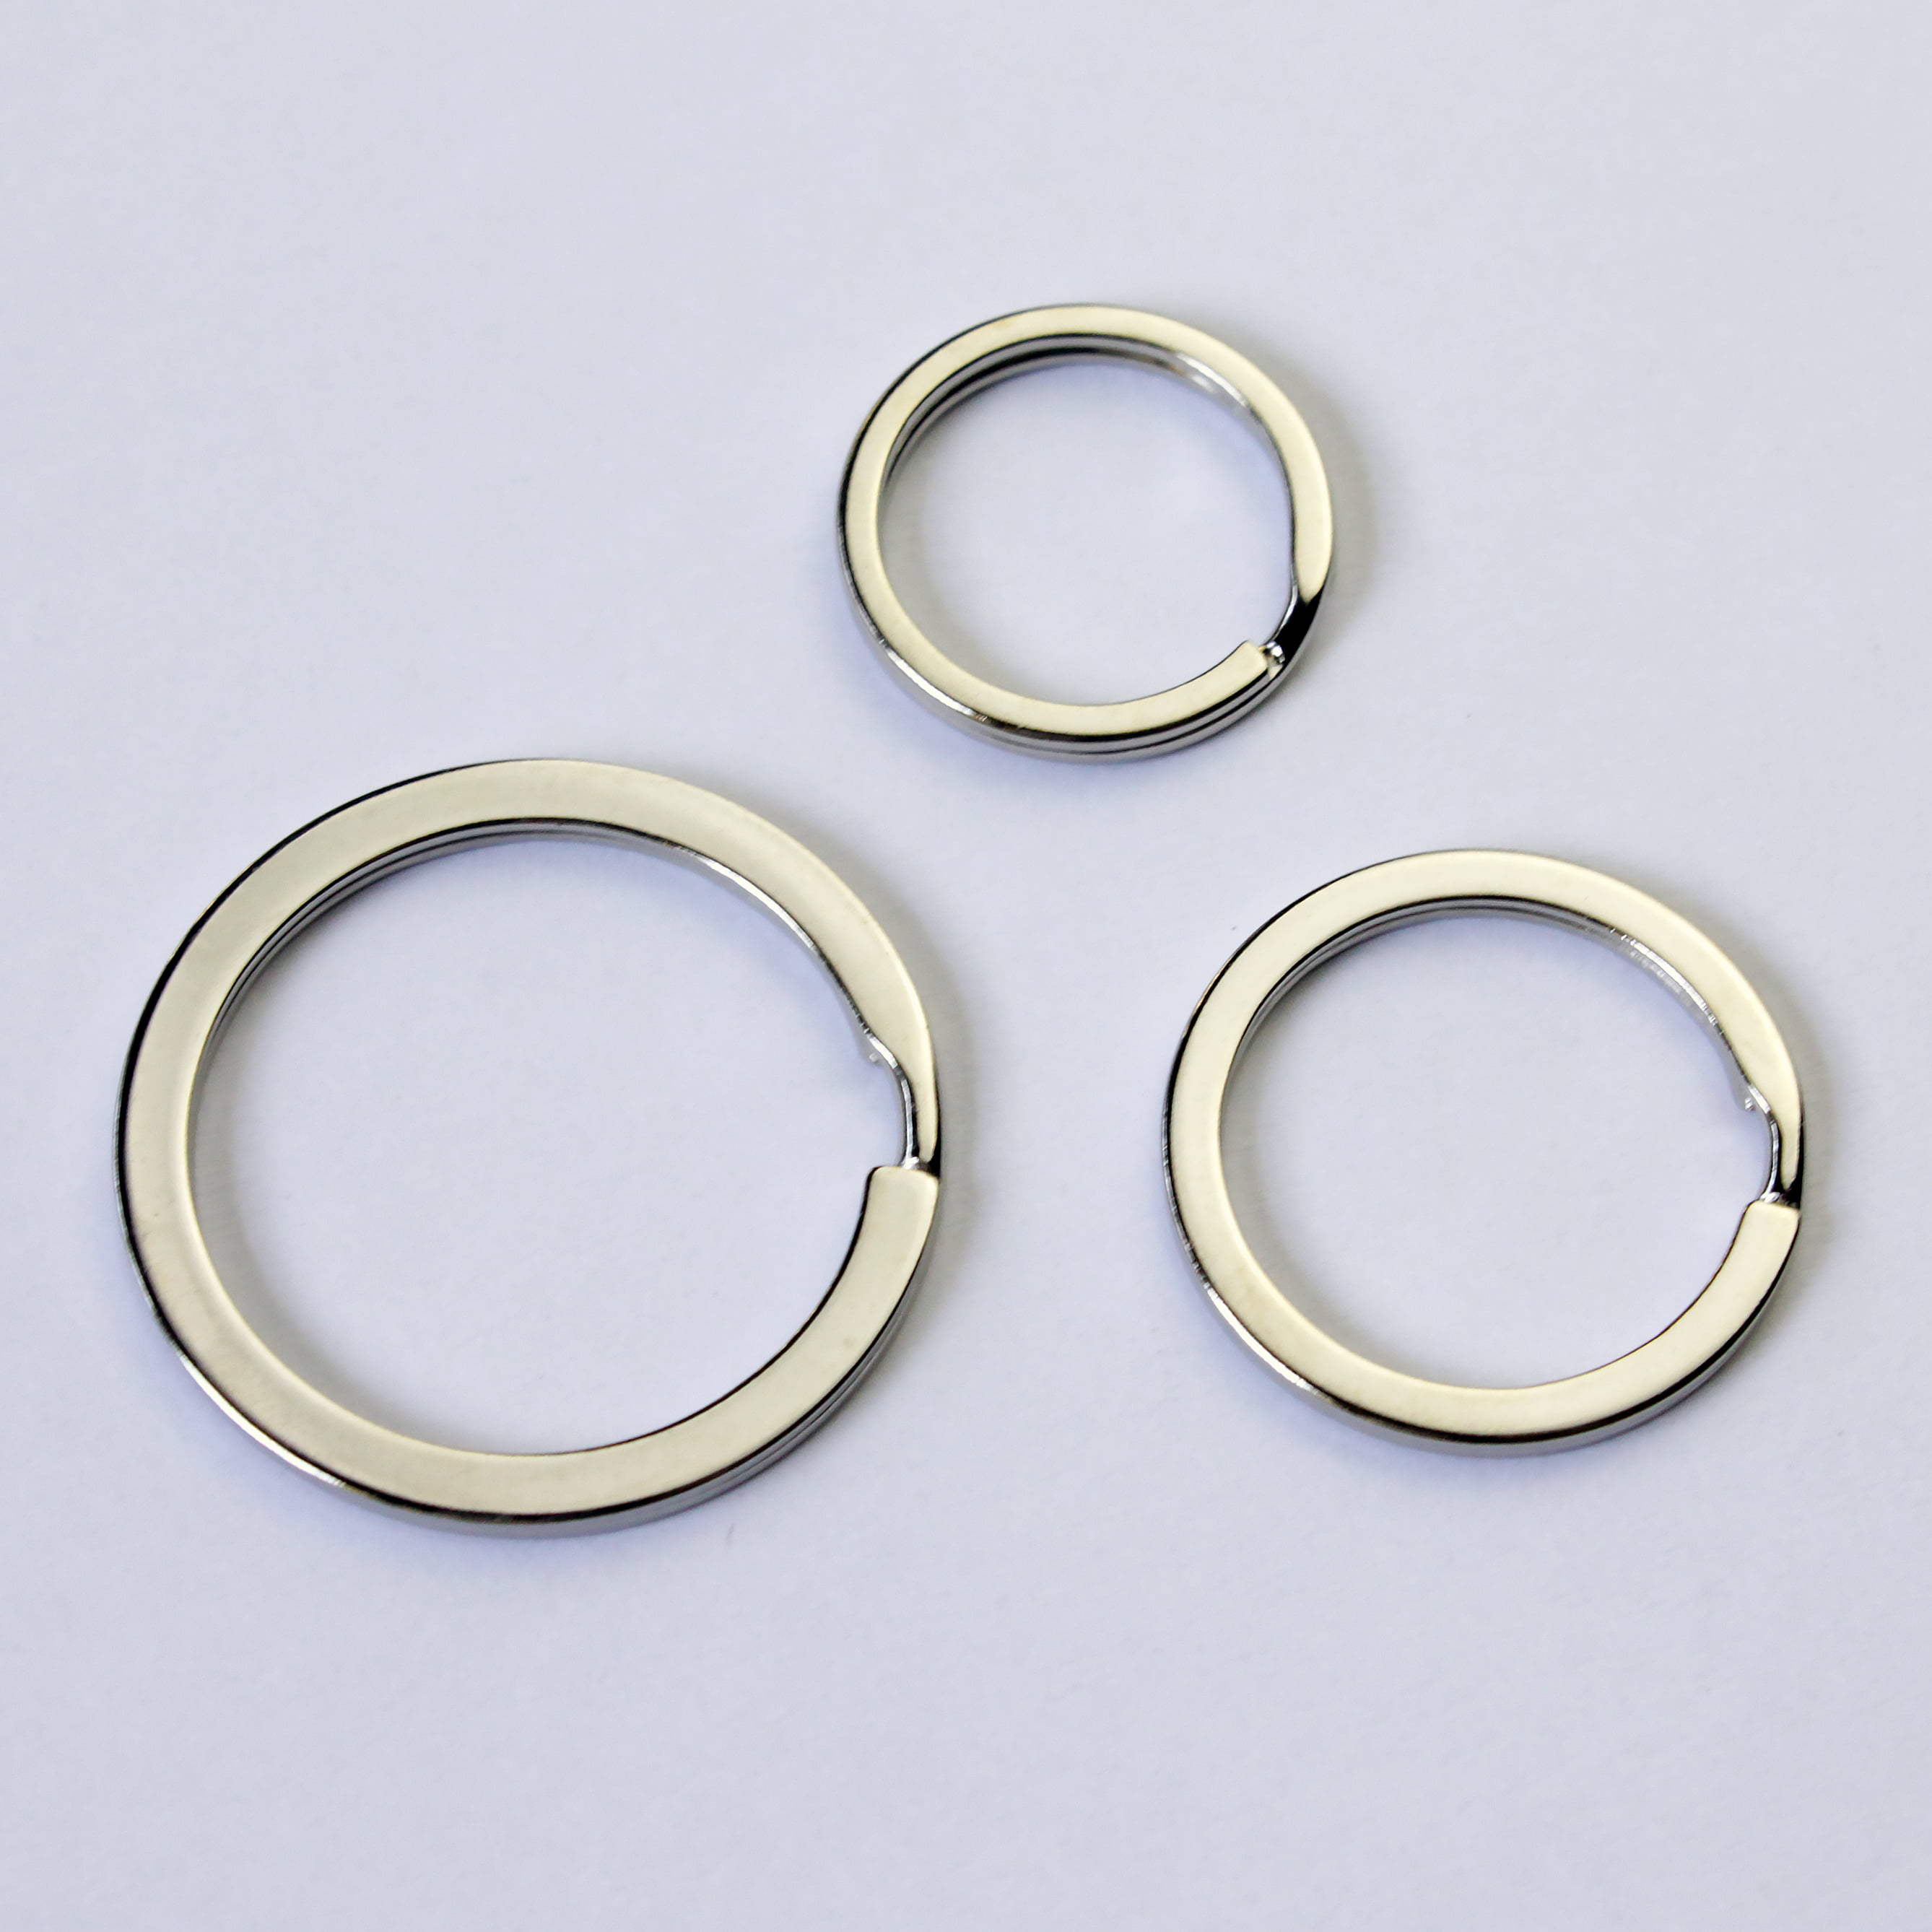 30pcs Flat Key Rings Key Chain Metal Split Ring (Round 1.25 inch Diameter),  for Home Car Keys Organization, Lead Free Nickel Plated Silver